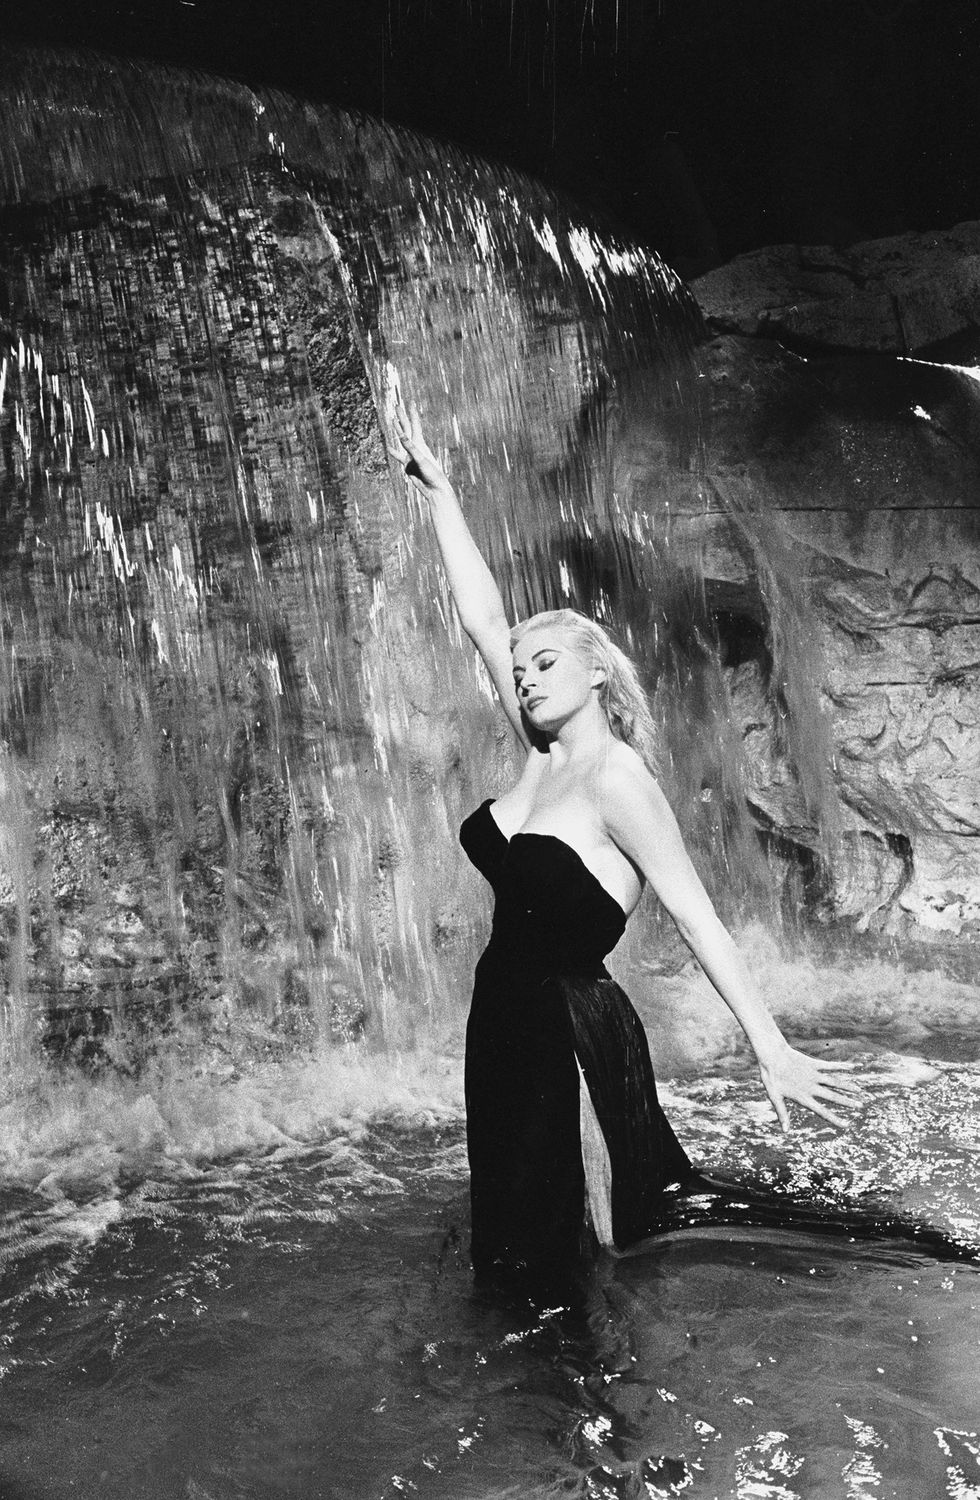 1960  swedish actress anita ekberg plays the glamorous sylvia in the fountain scene from 'la dolce vita', directed by federico fellini  photo via john kobal foundationgetty images